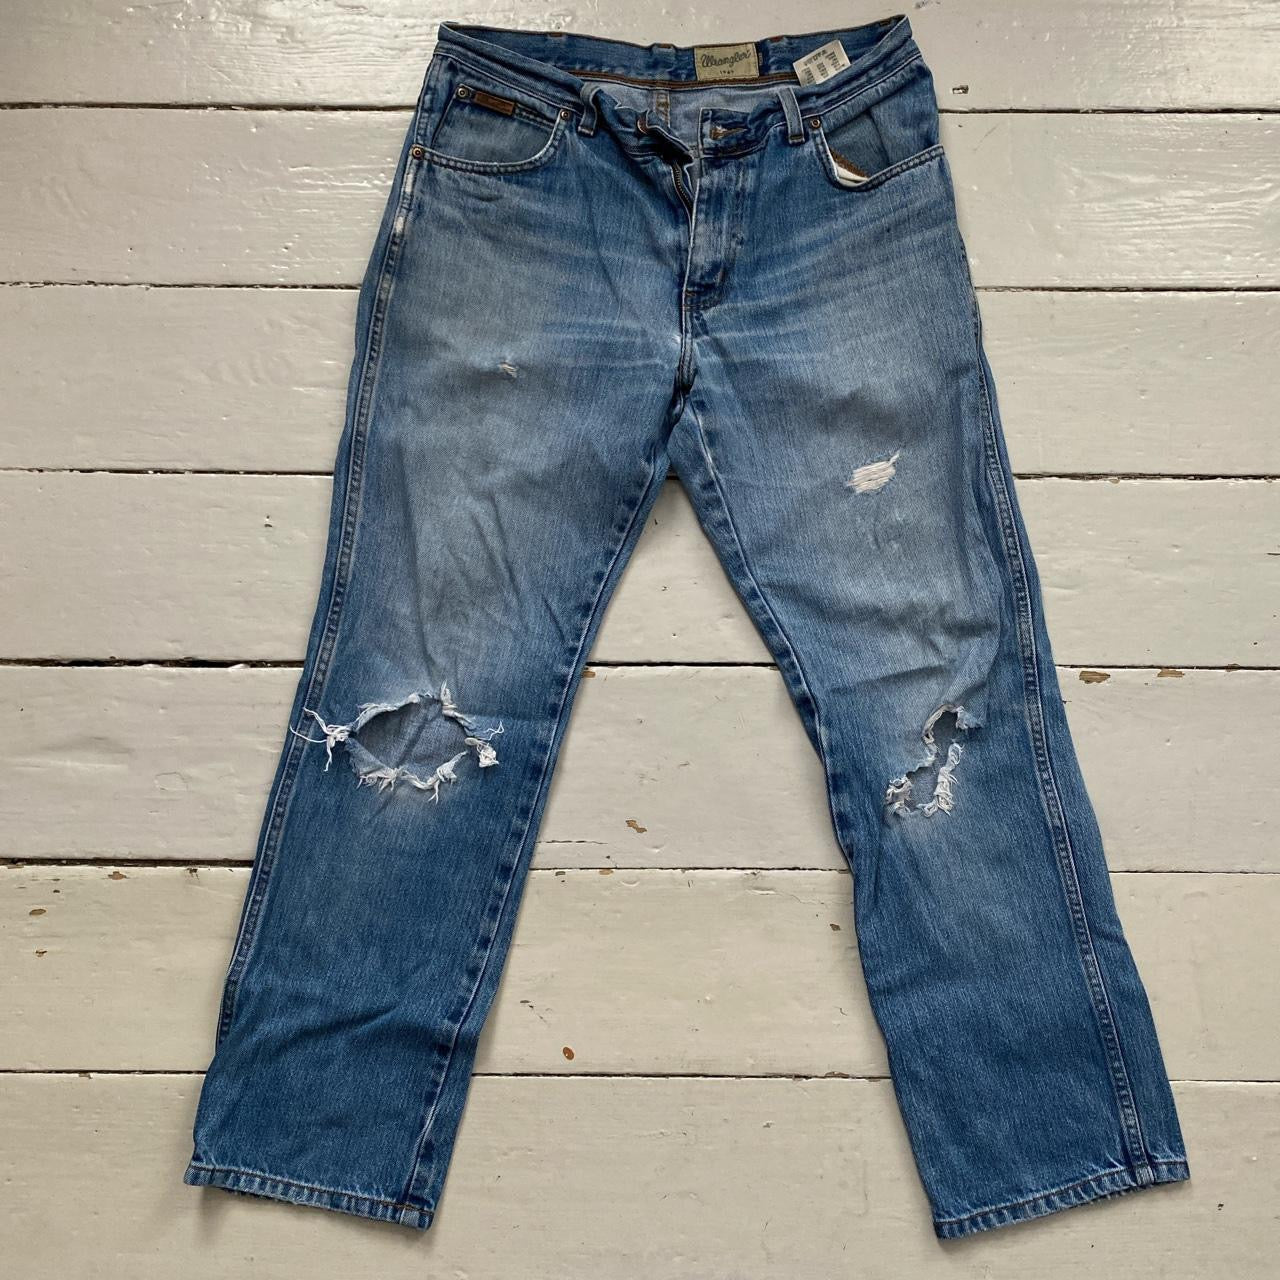 Wrangler Texas Distressed Jeans (32/28)